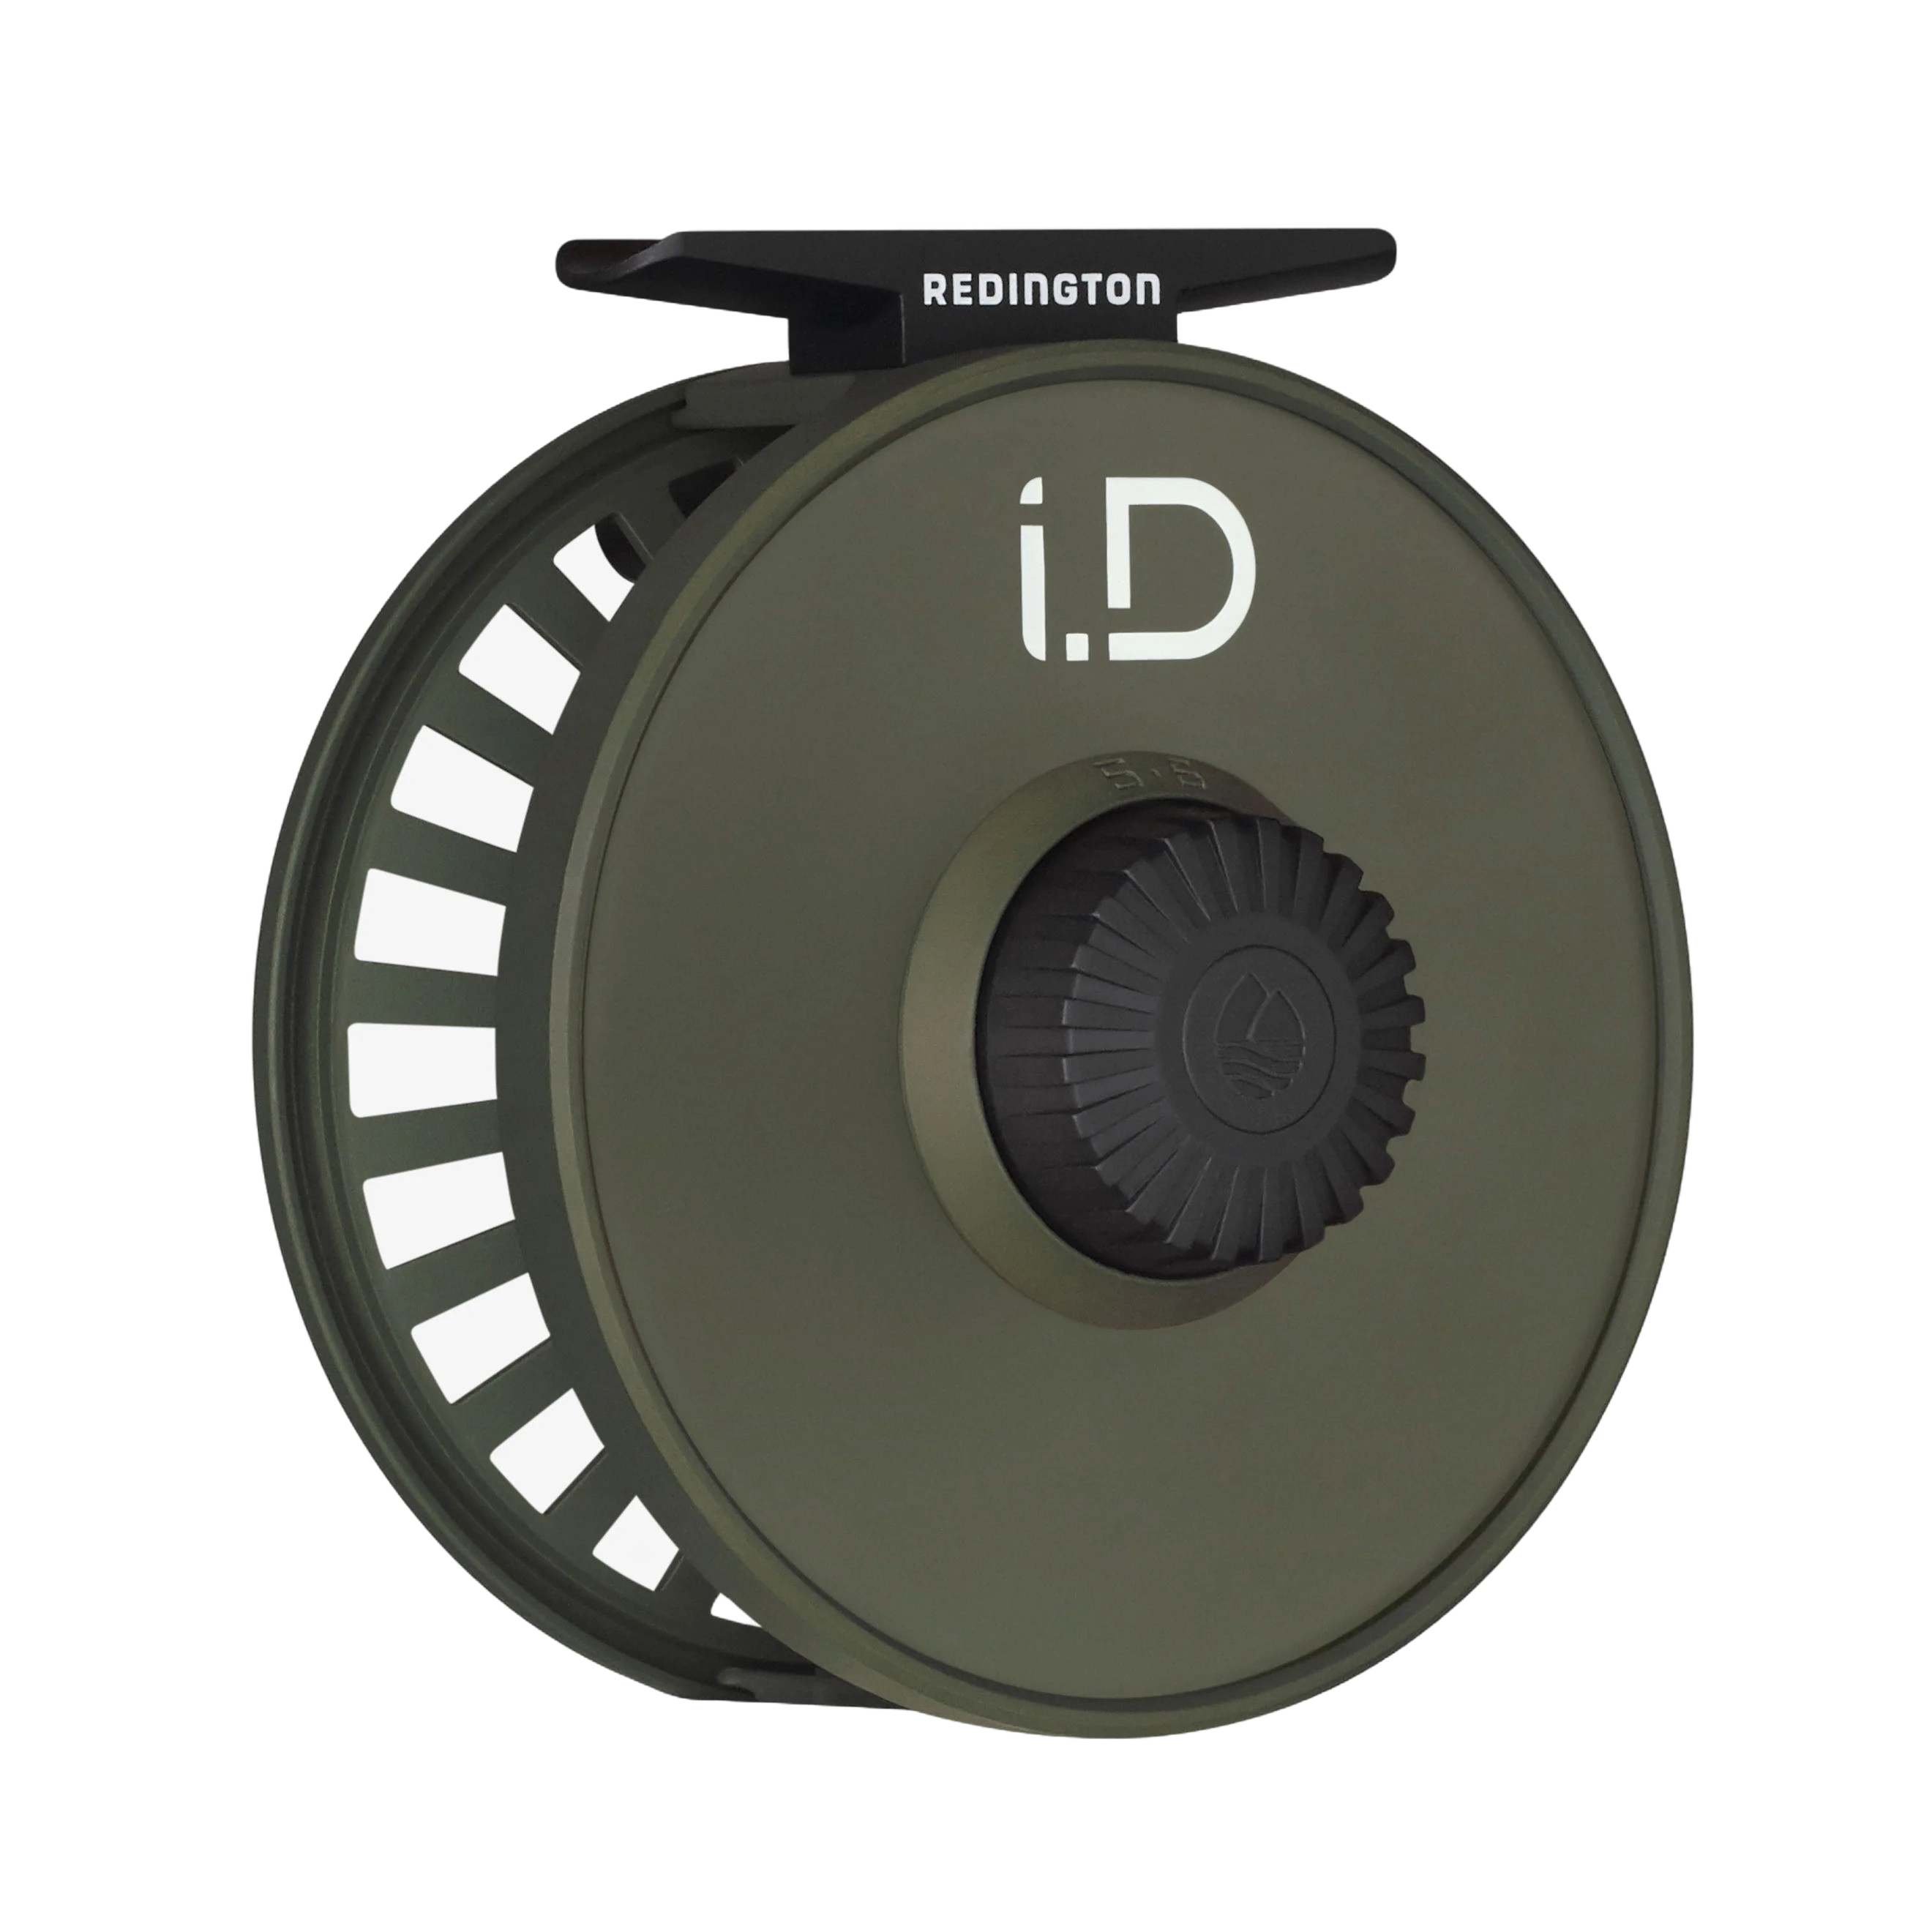 Redington ID Fly Wheel